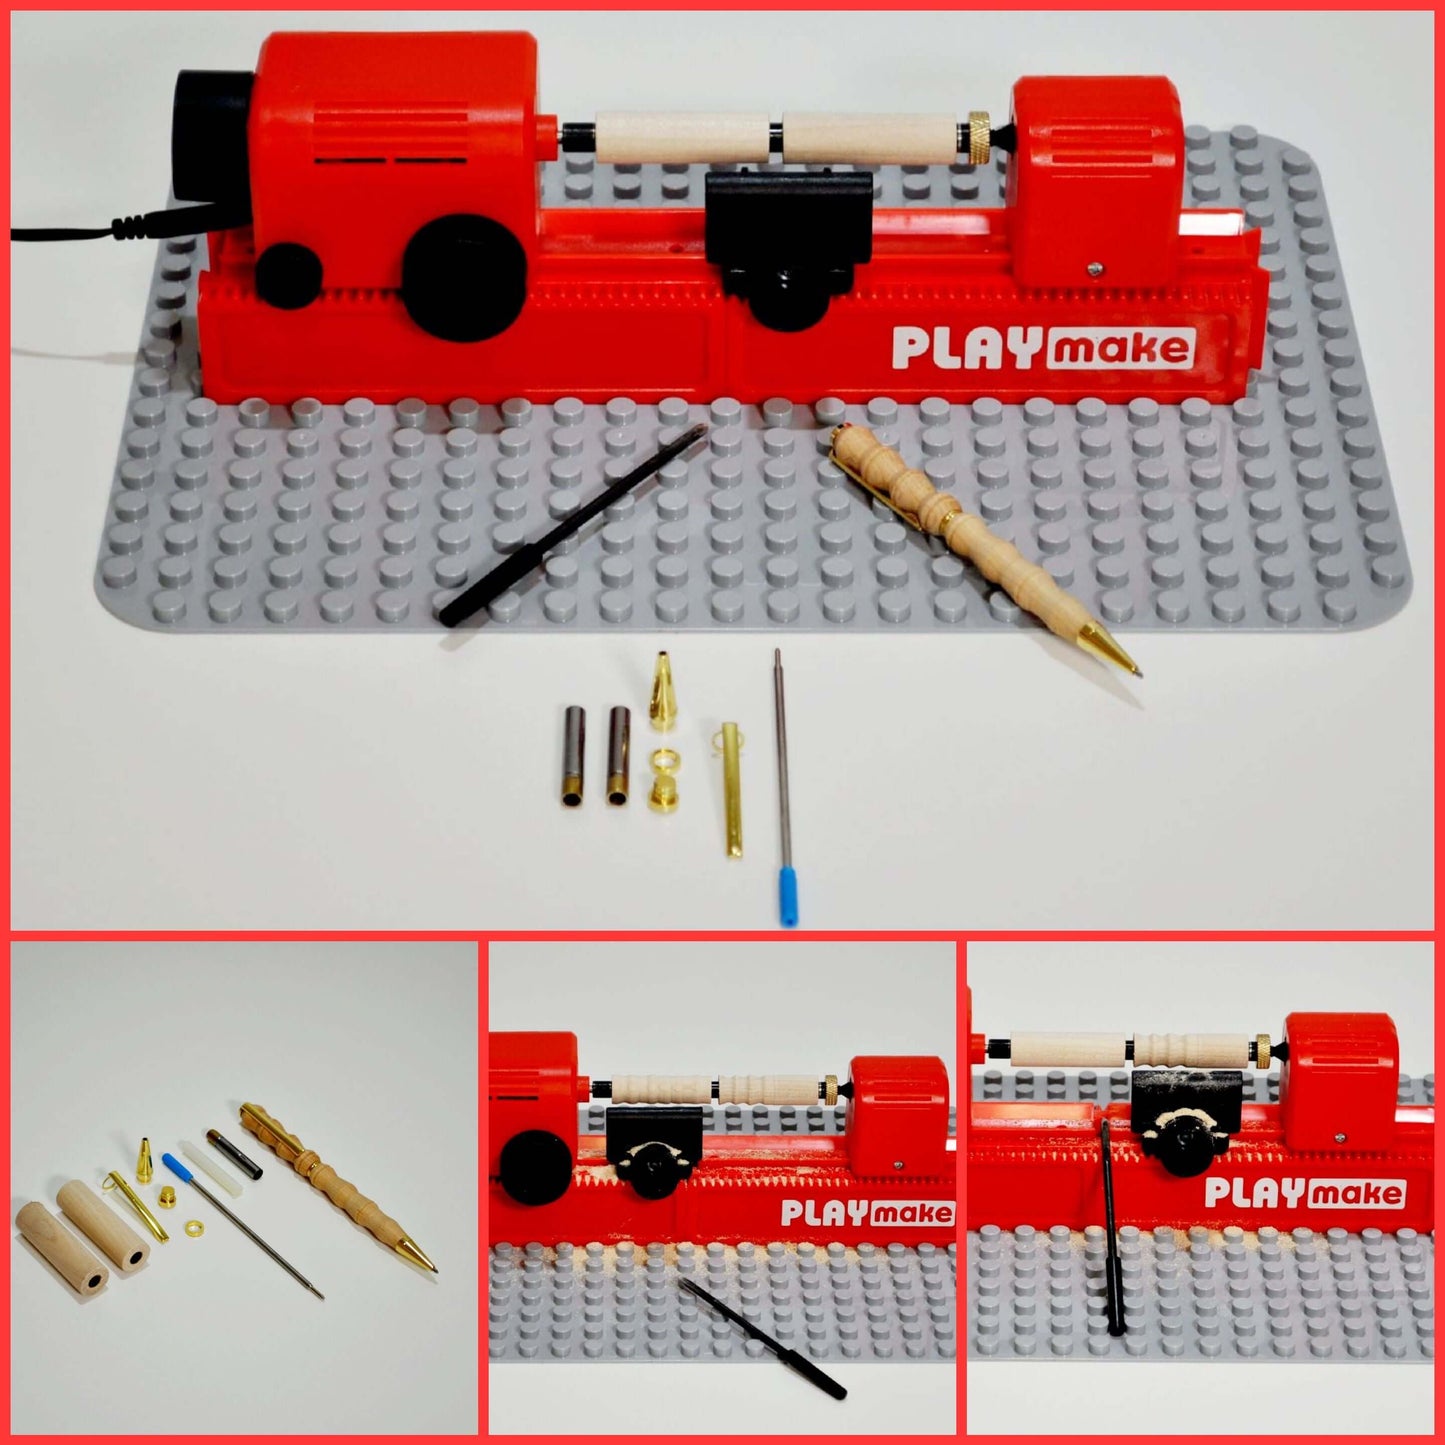 PLAYmake penmaker starter set